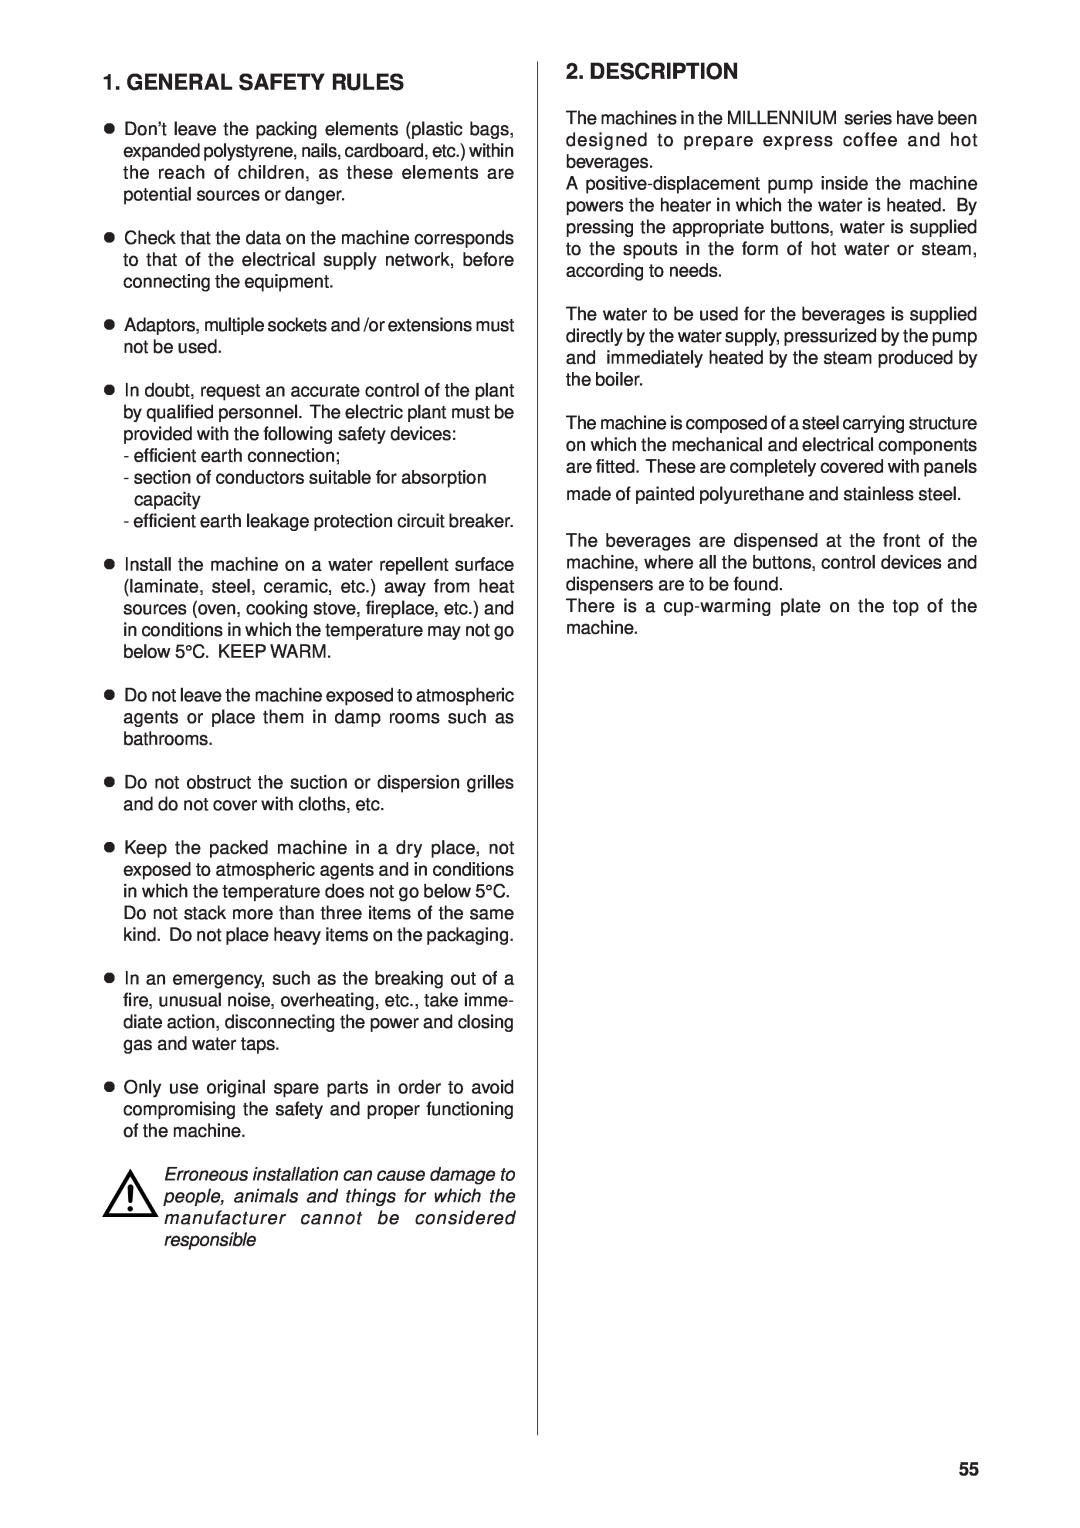 Rancilio Millennium manual General Safety Rules, Description 